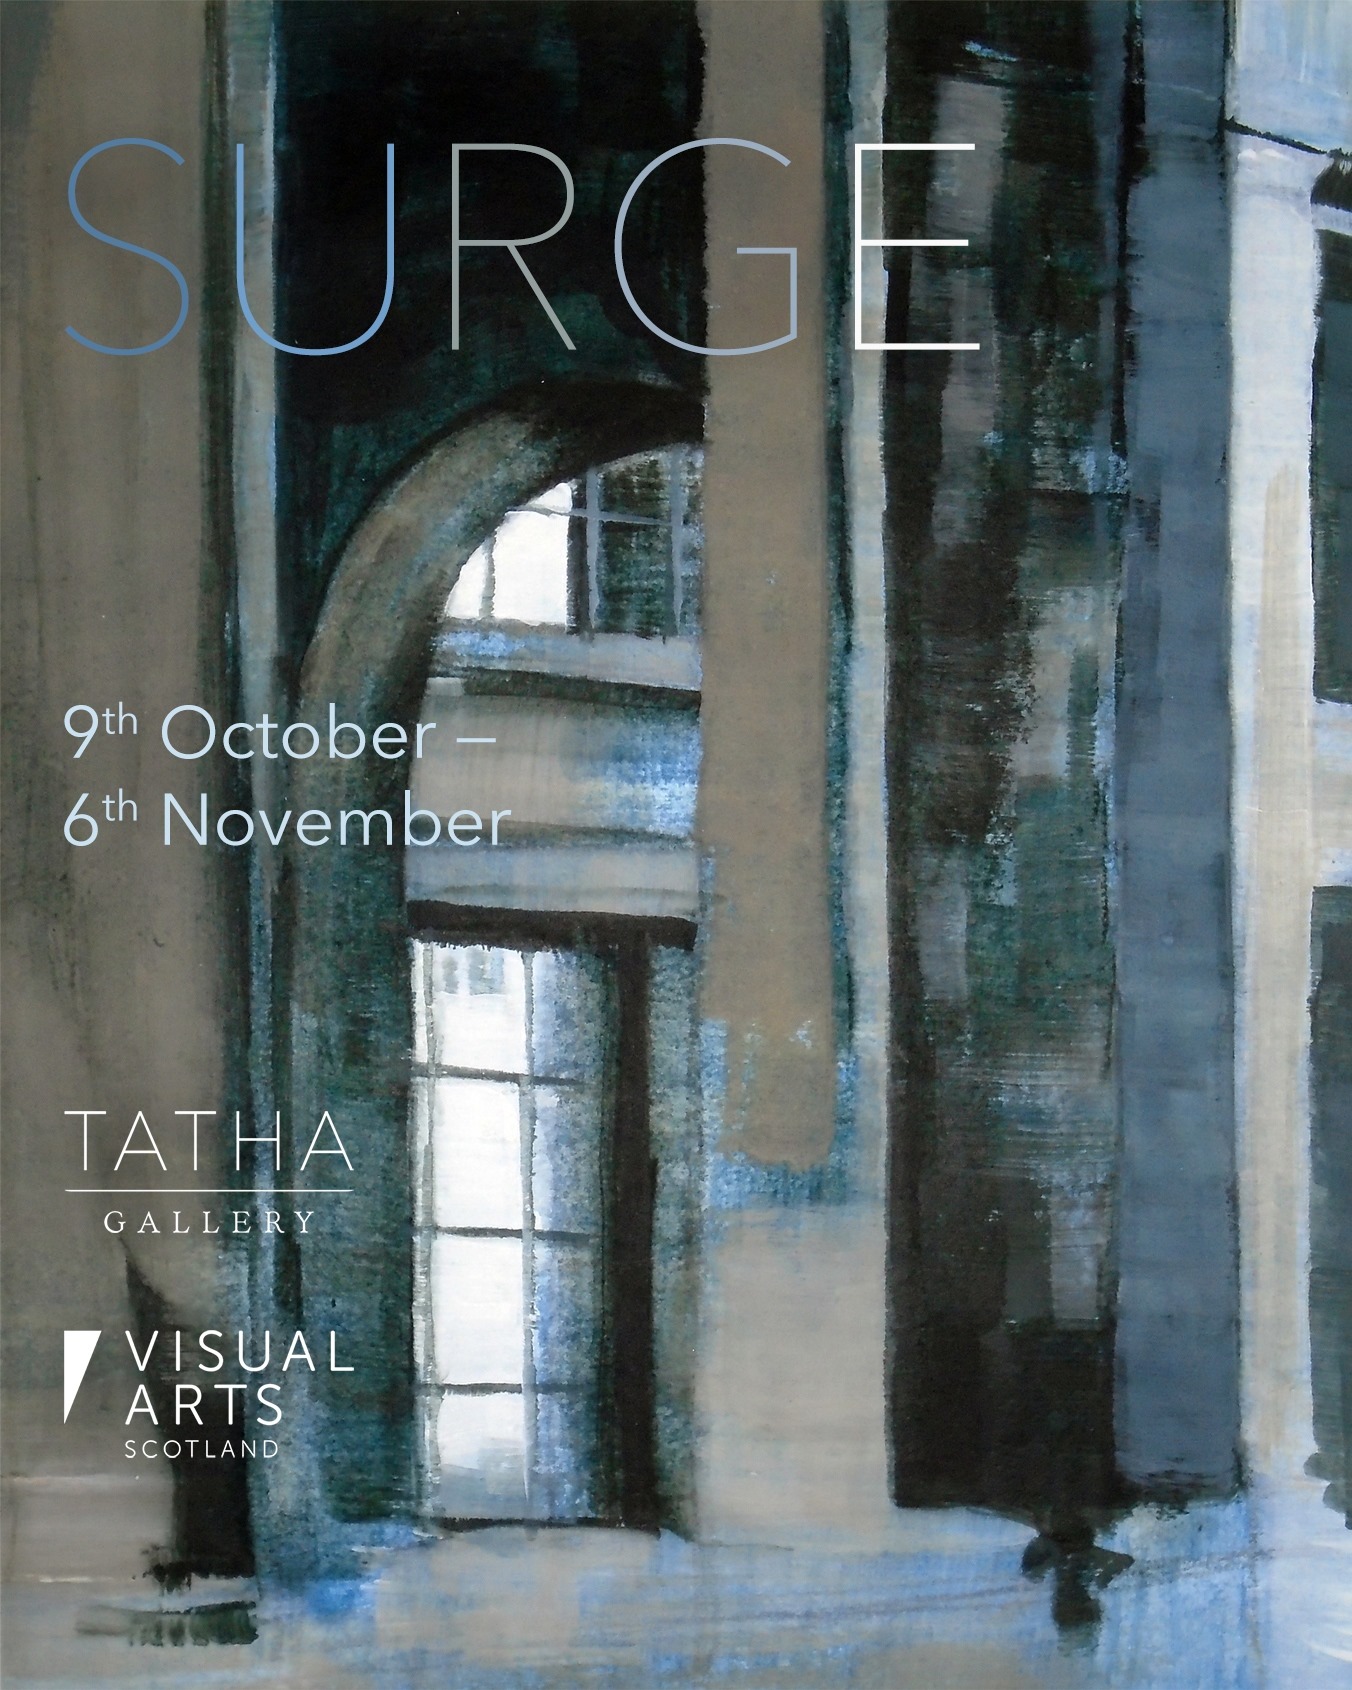 SURGE - Tatha Gallery